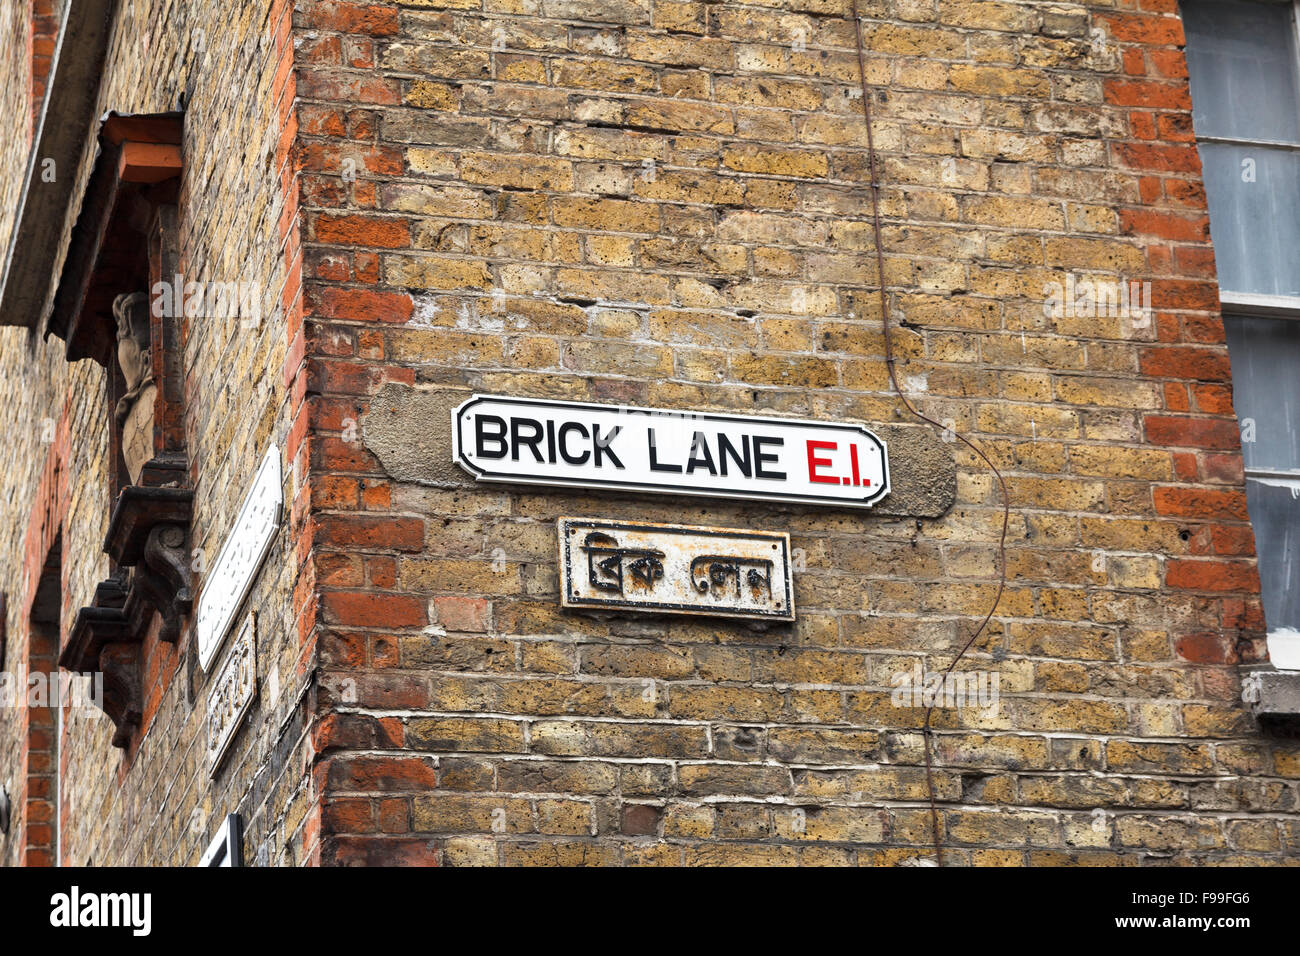 Brick Lane street sign in East End, London, UK Stock Photo